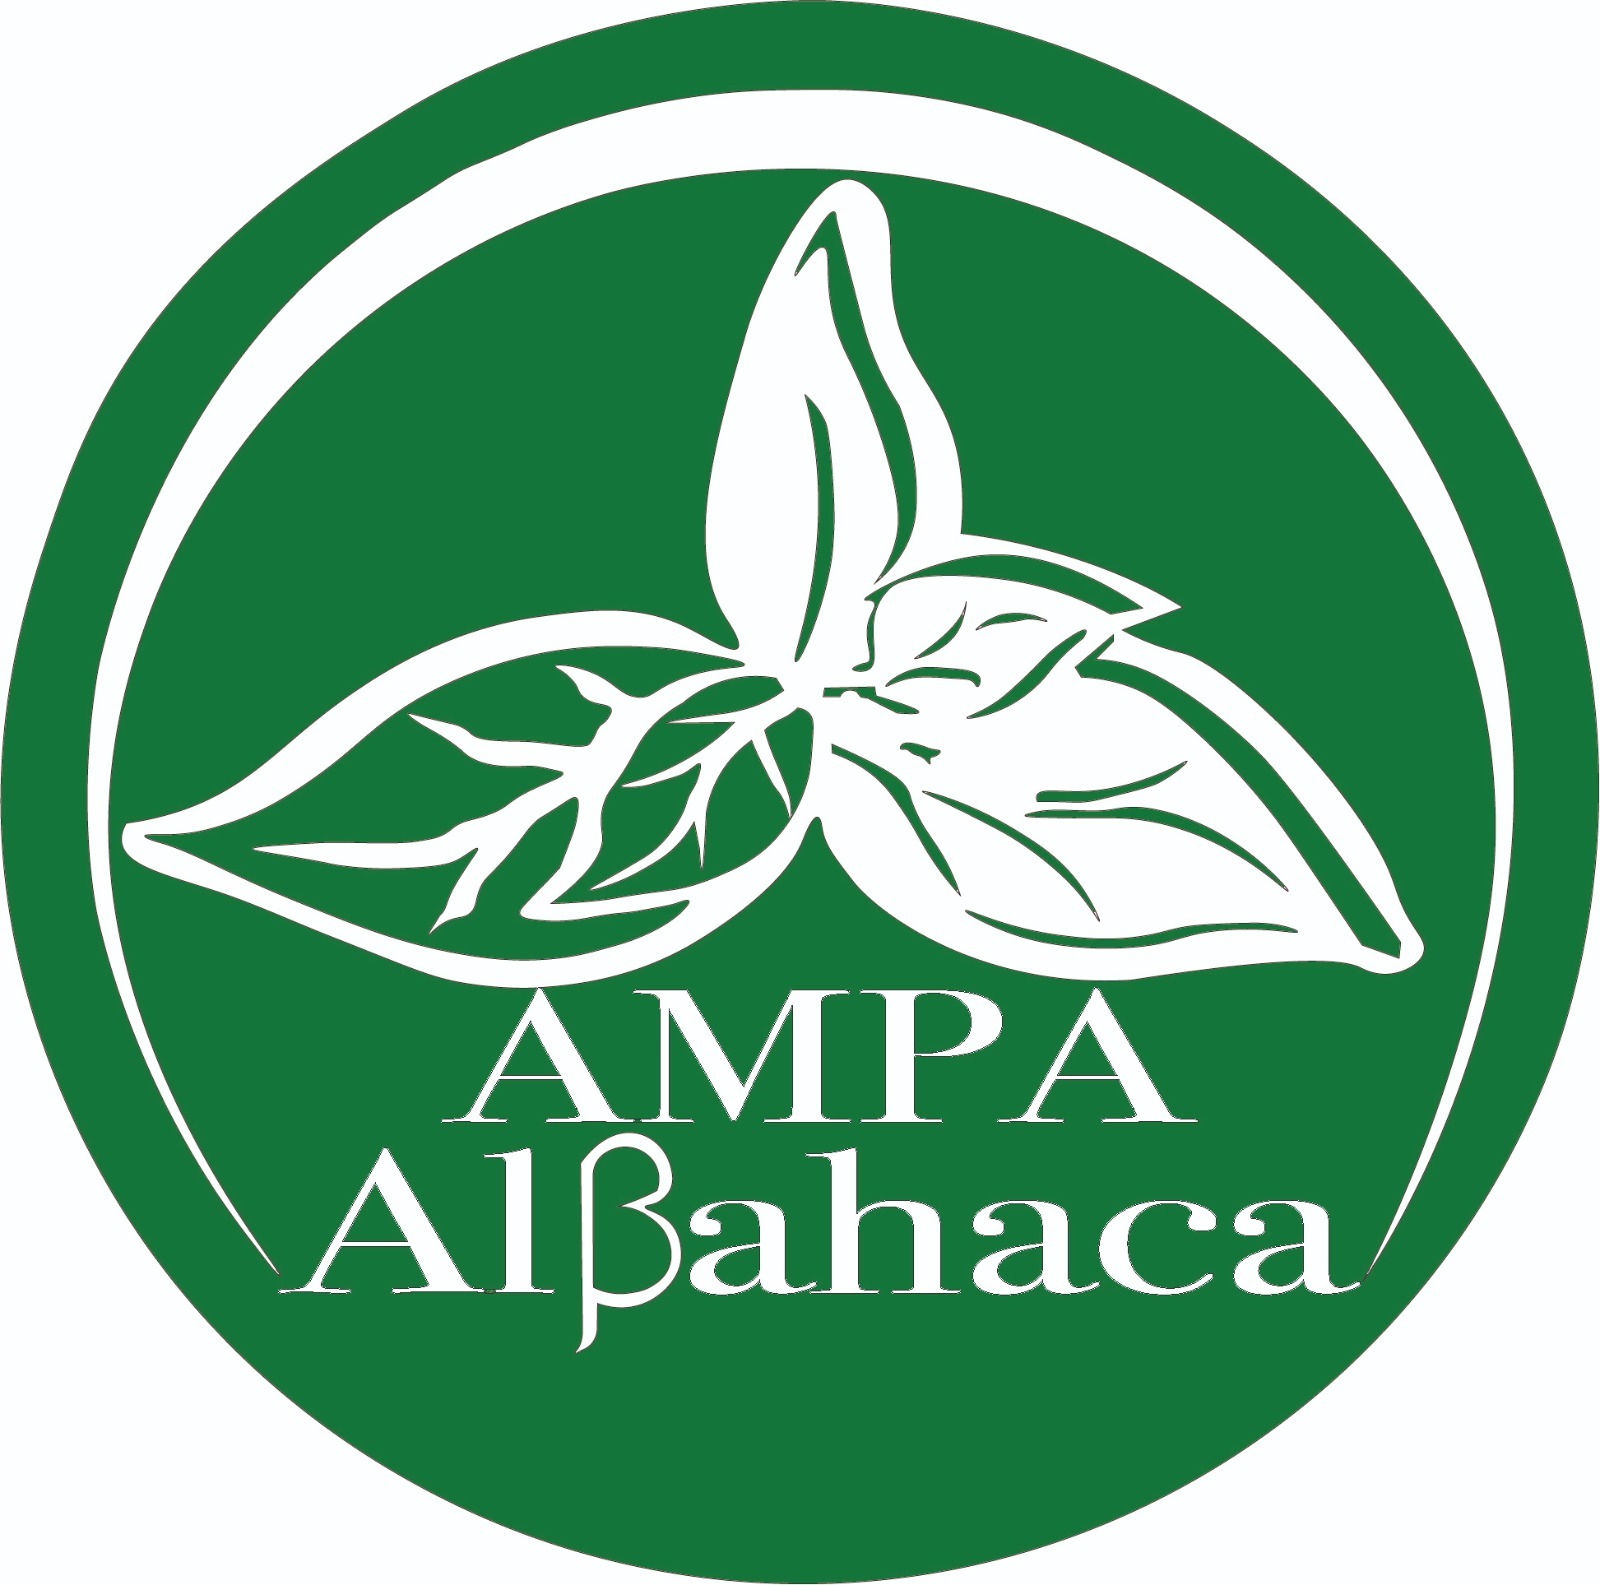 AMPA Albahaca